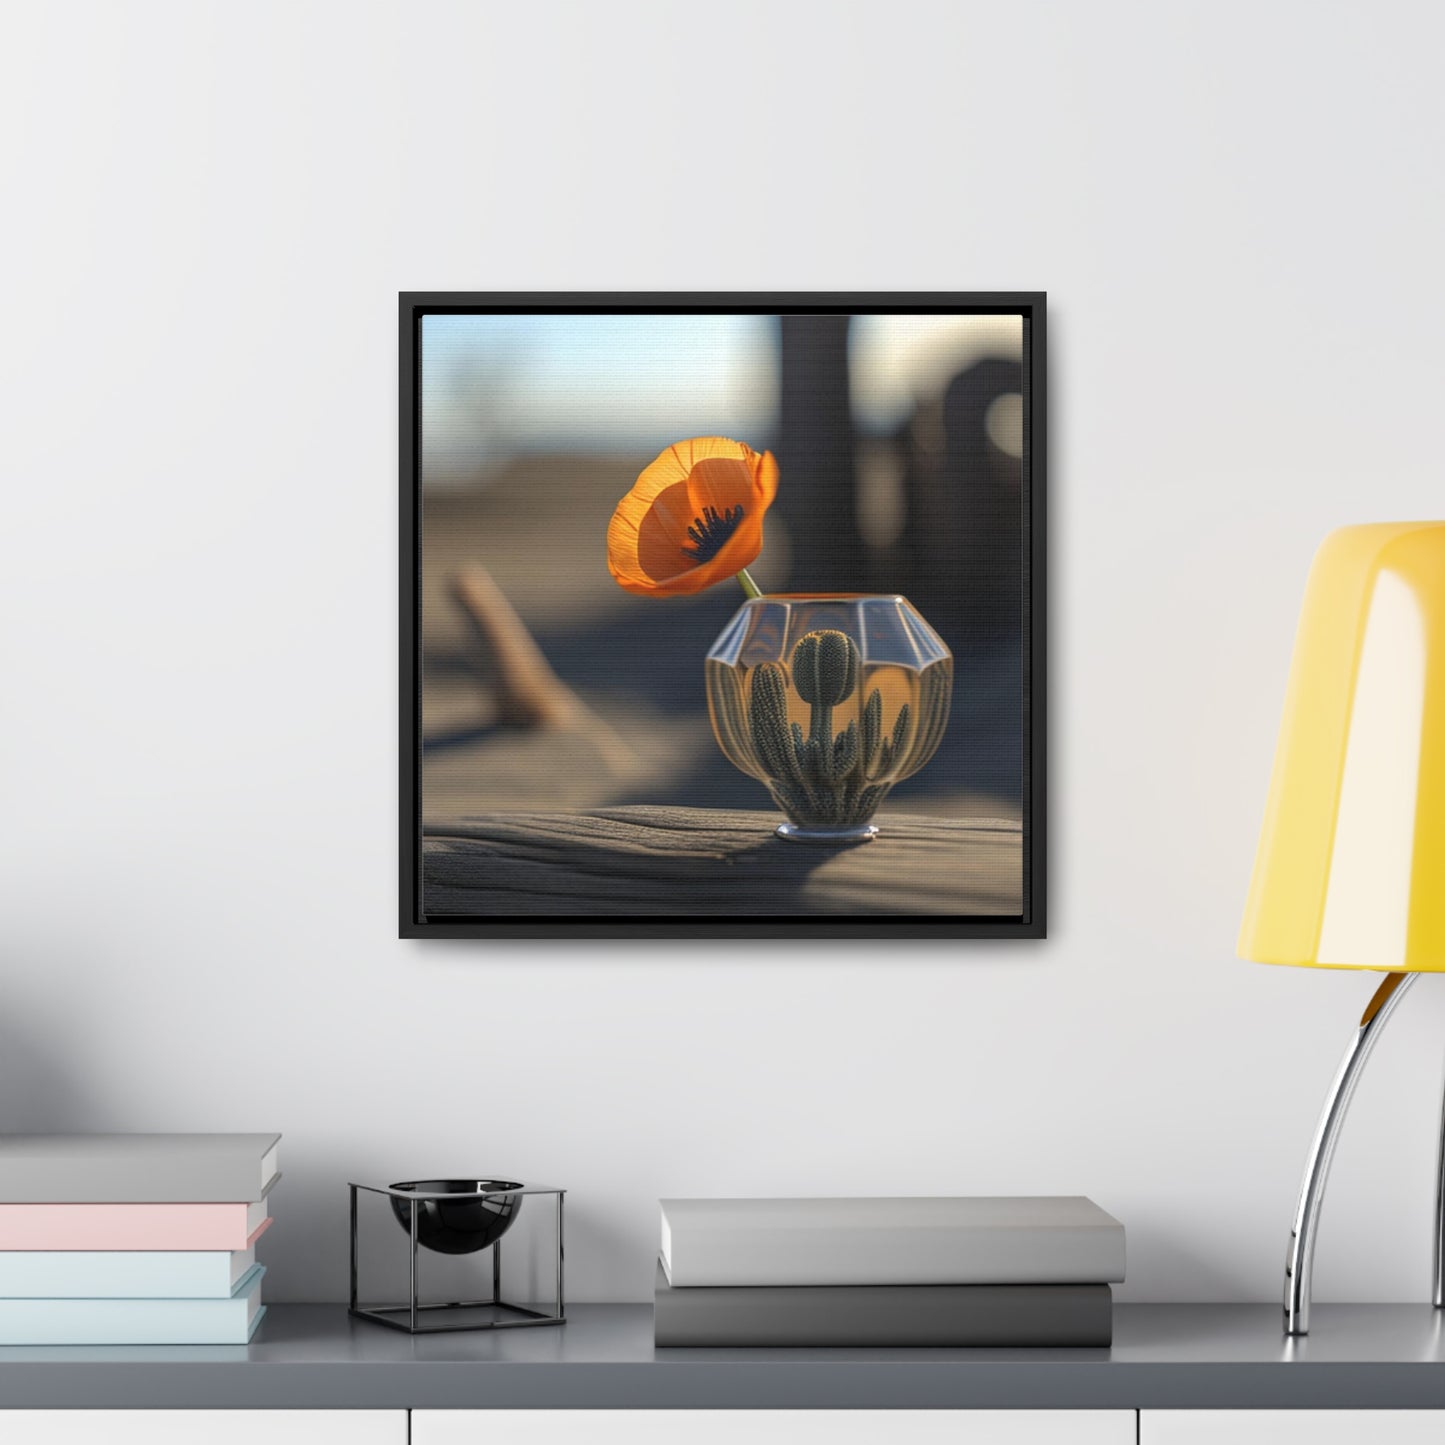 Gallery Canvas Wraps, Square Frame Orange Poppy in a Vase 2